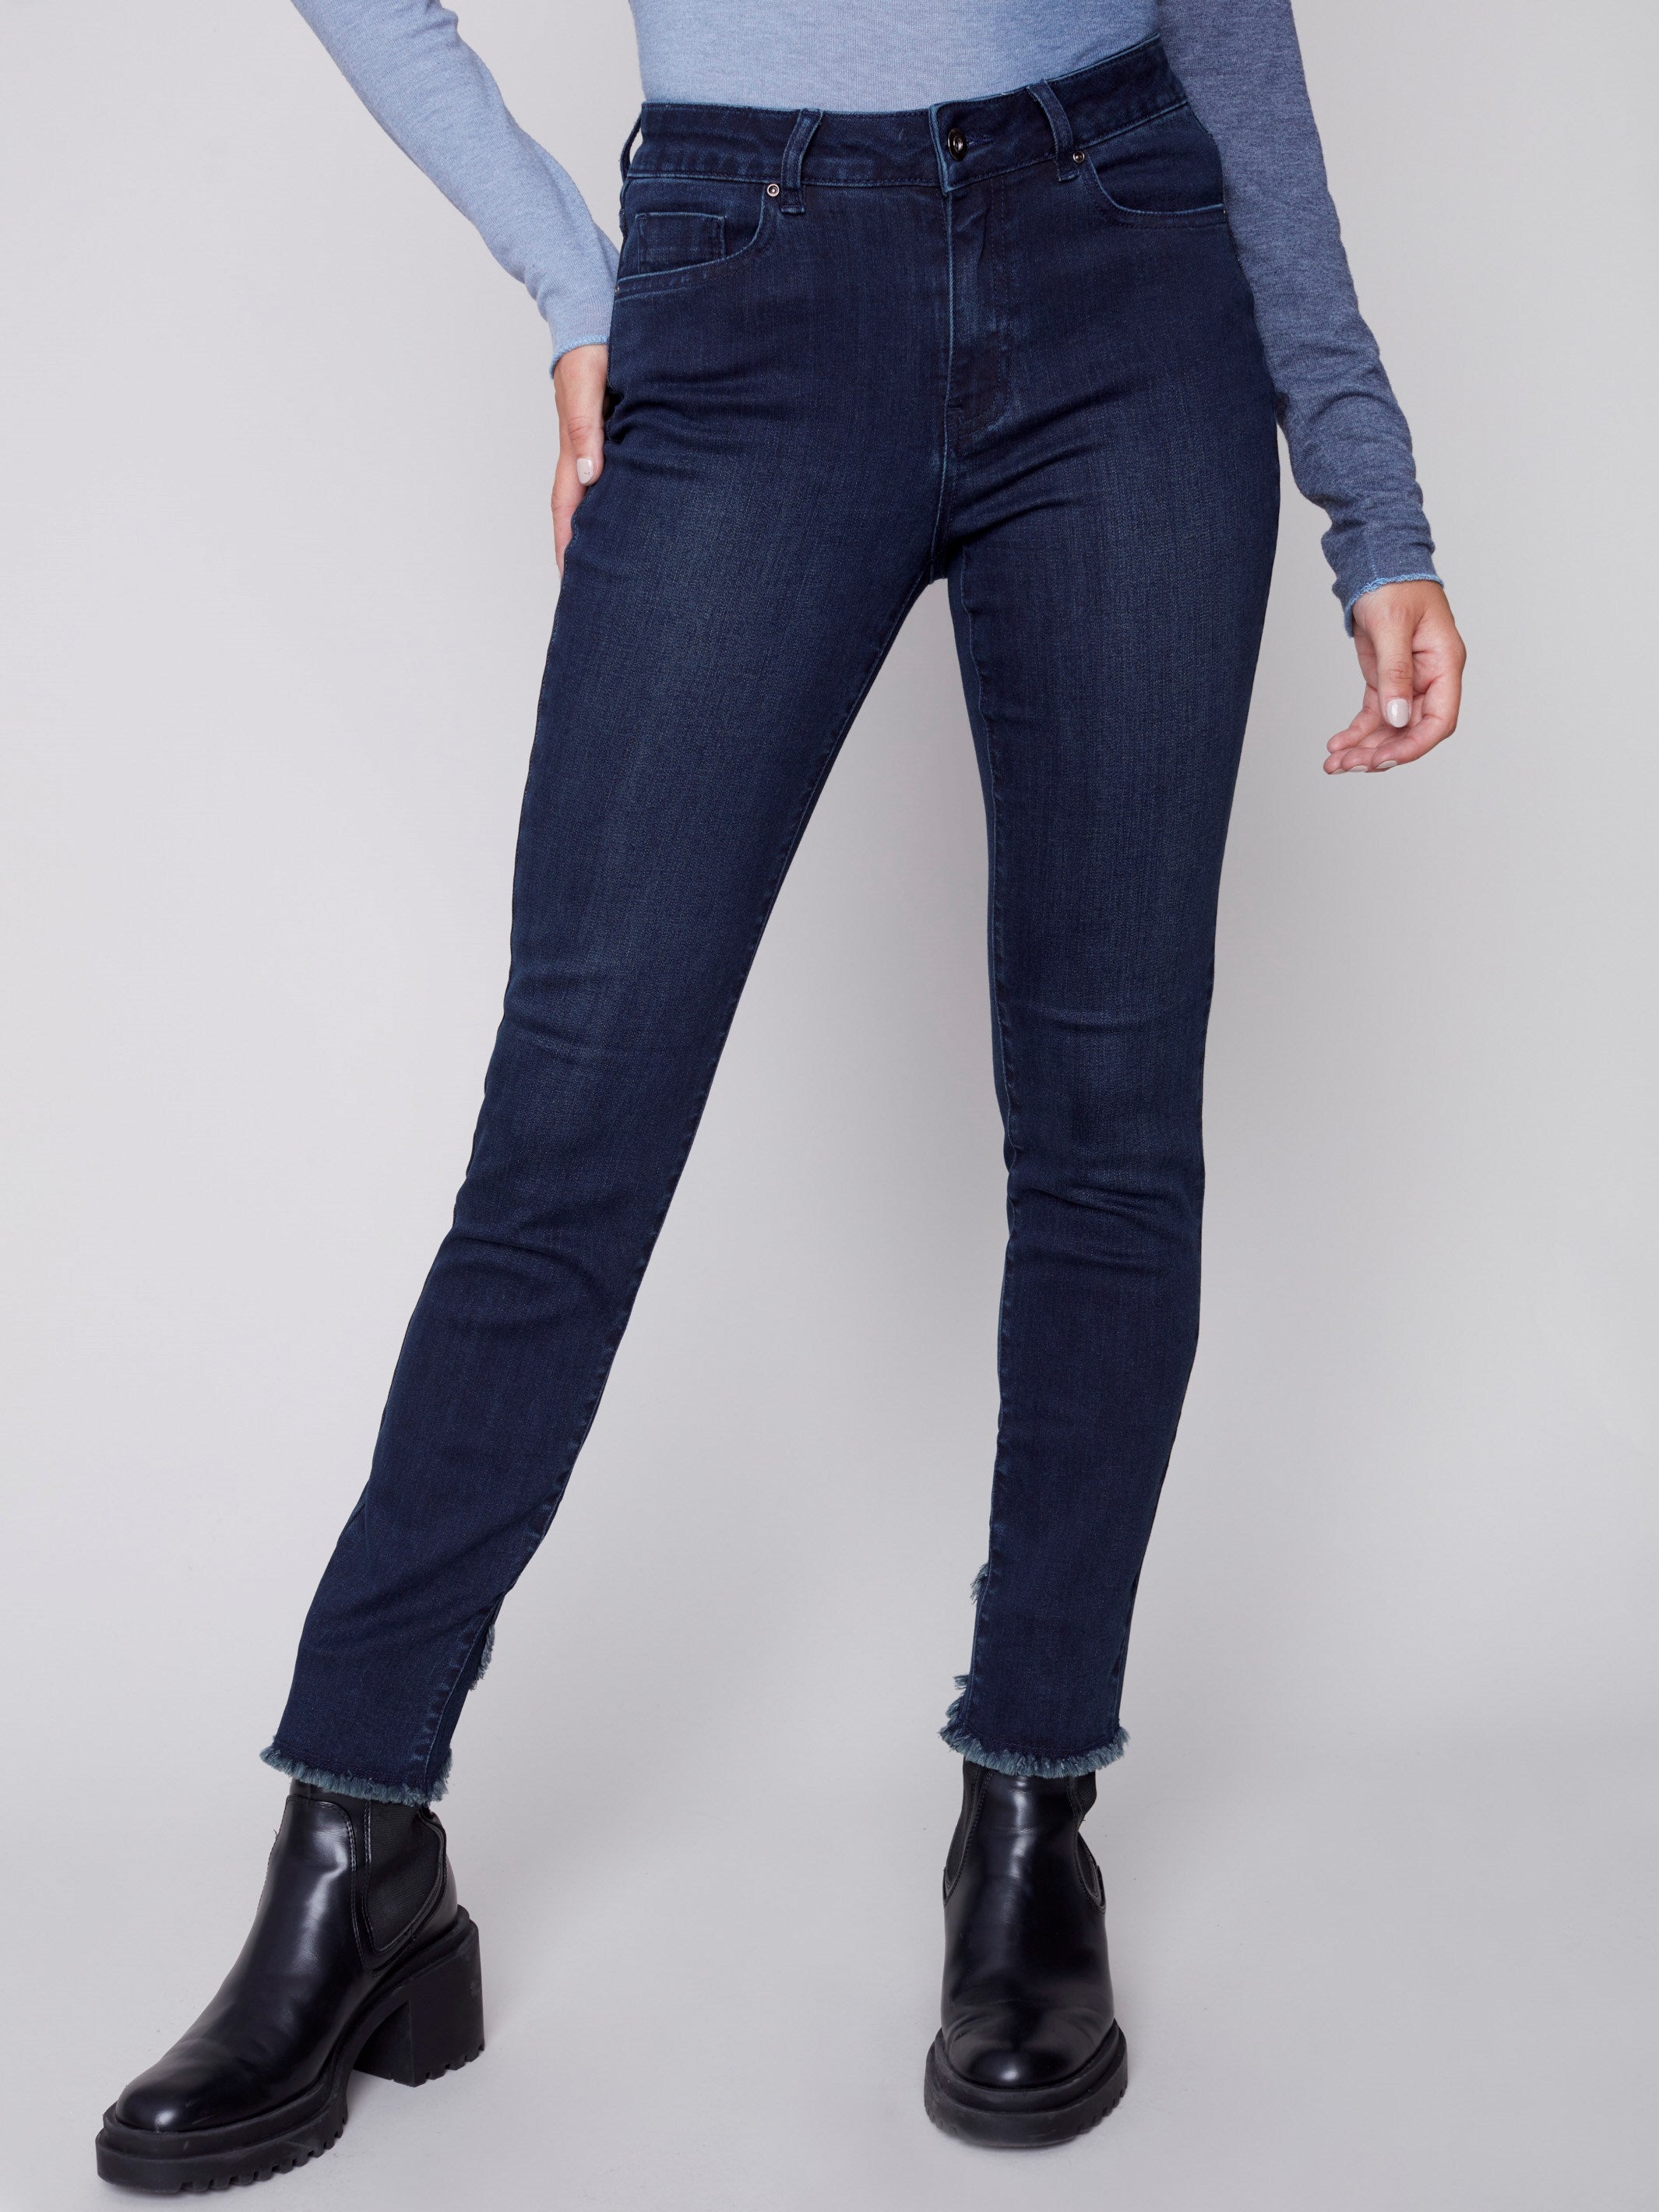 Stretchy Jeans with Tulip Hem - Blue Black